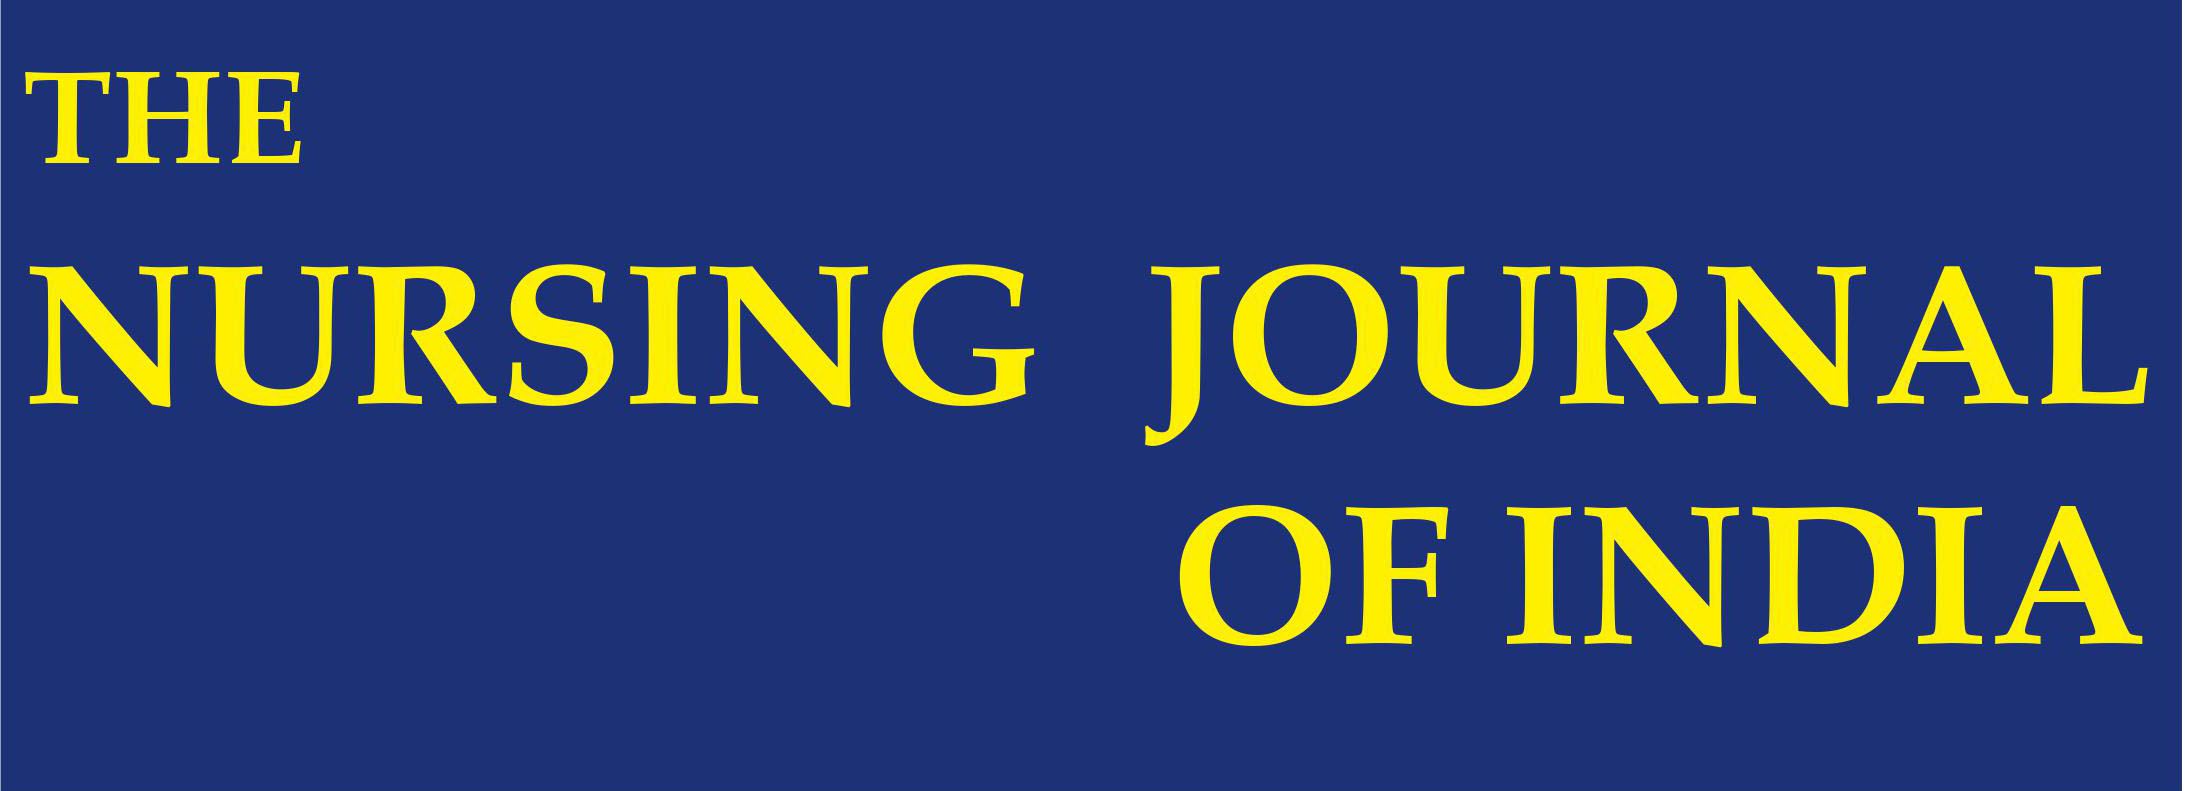 The Nursing Journal of India